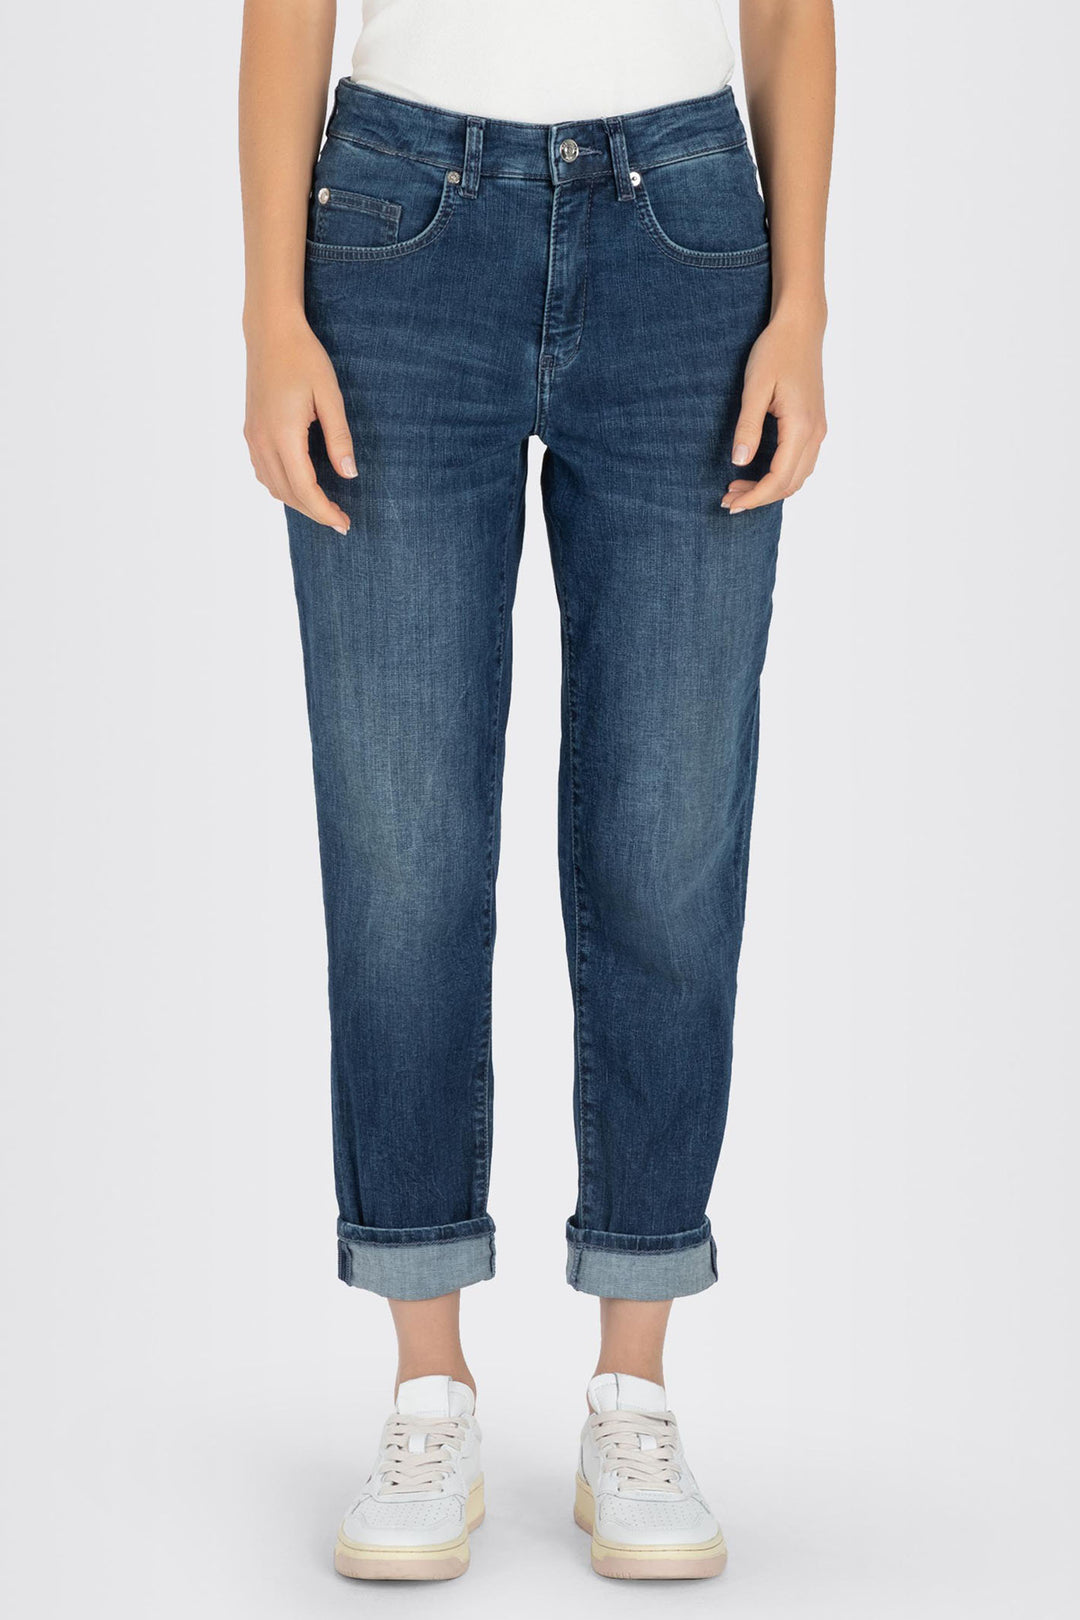 Mac 3197-90-0391 D627 Carol Blue Net Wash Lightweight Denim Jeans - Olivia Grace Fashion